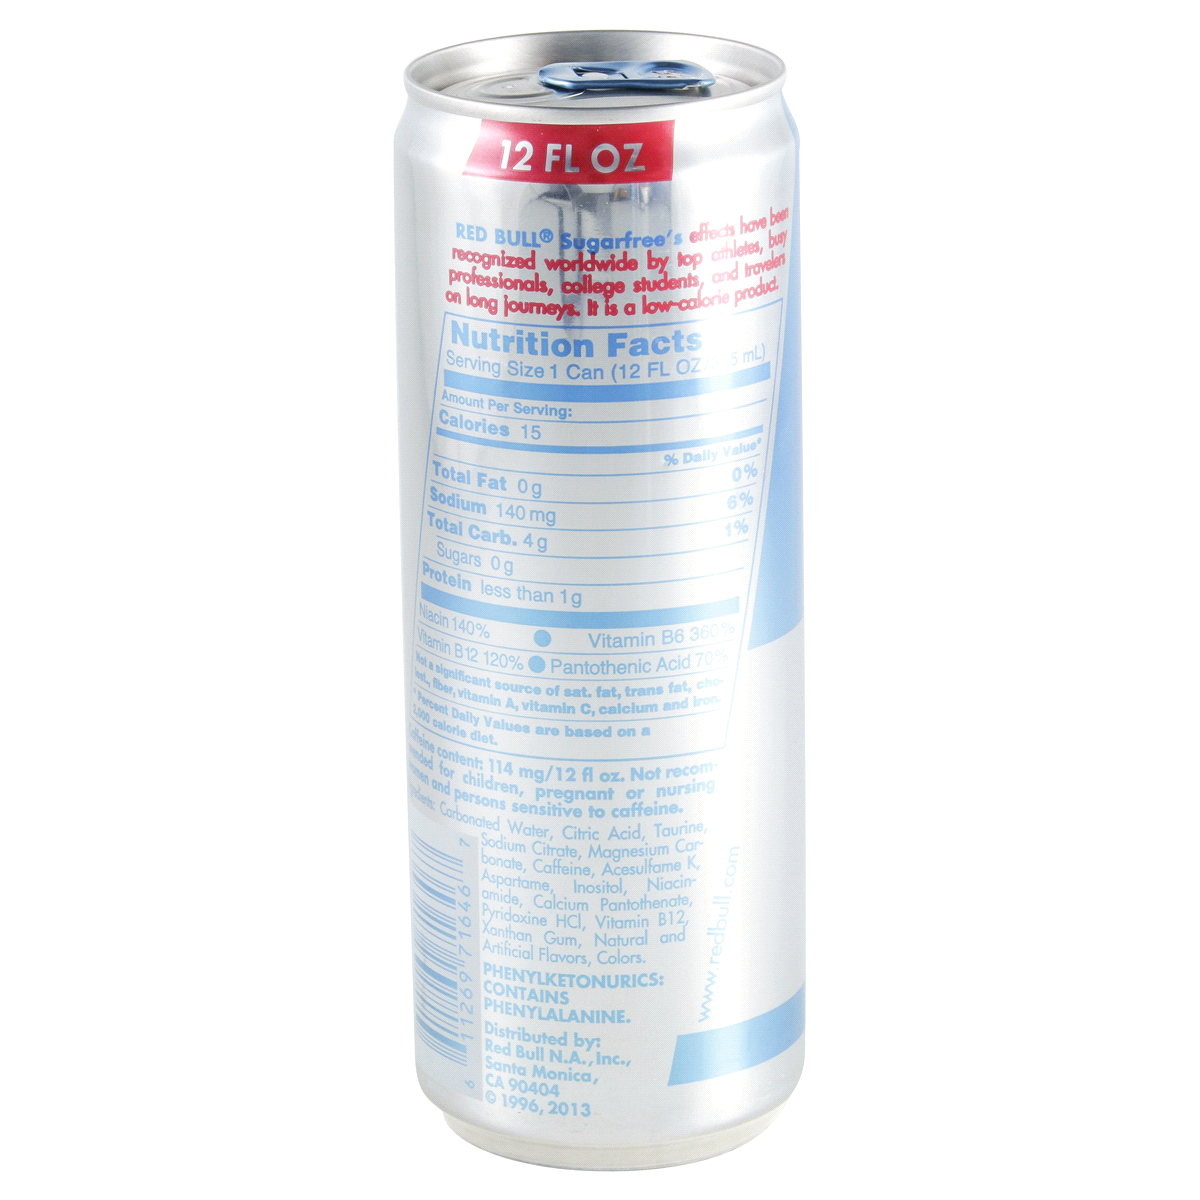 slide 14 of 67, Red Bull Sugarfree Energy Drink 12 fl oz, 12 fl oz